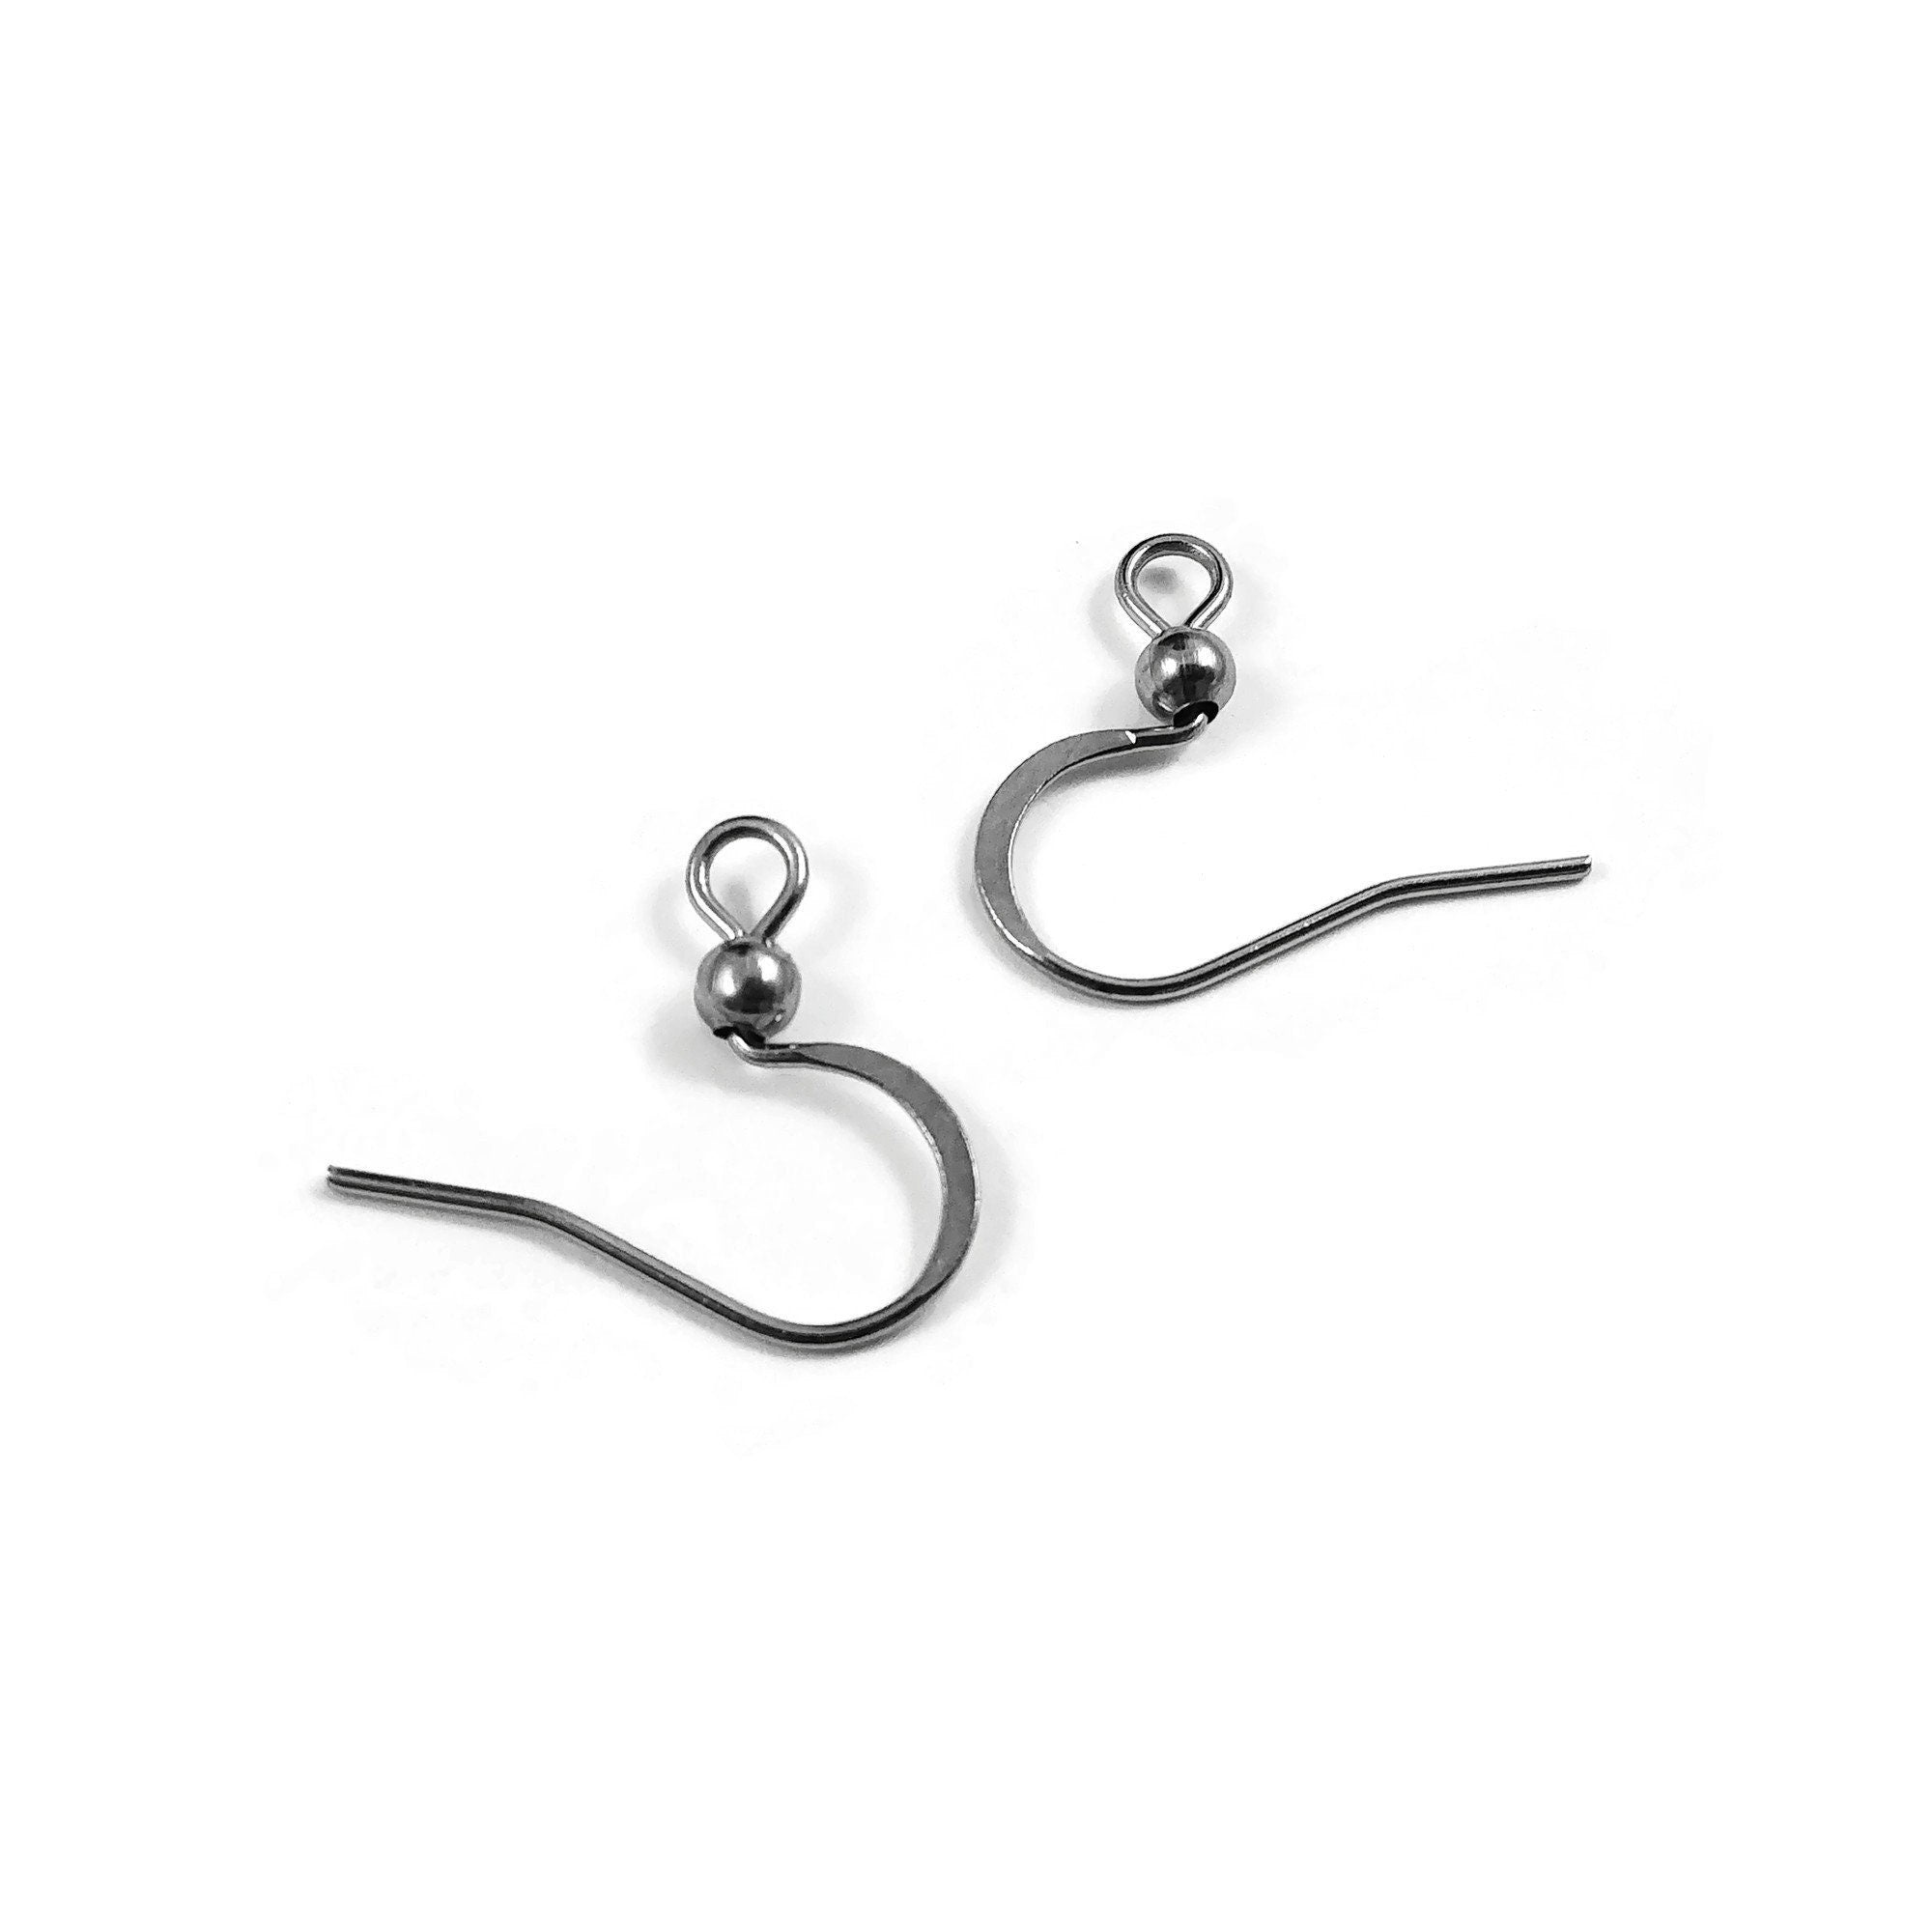 Nickel free stainless steel minimalist earring hooks 50 pcs (25 pairs)